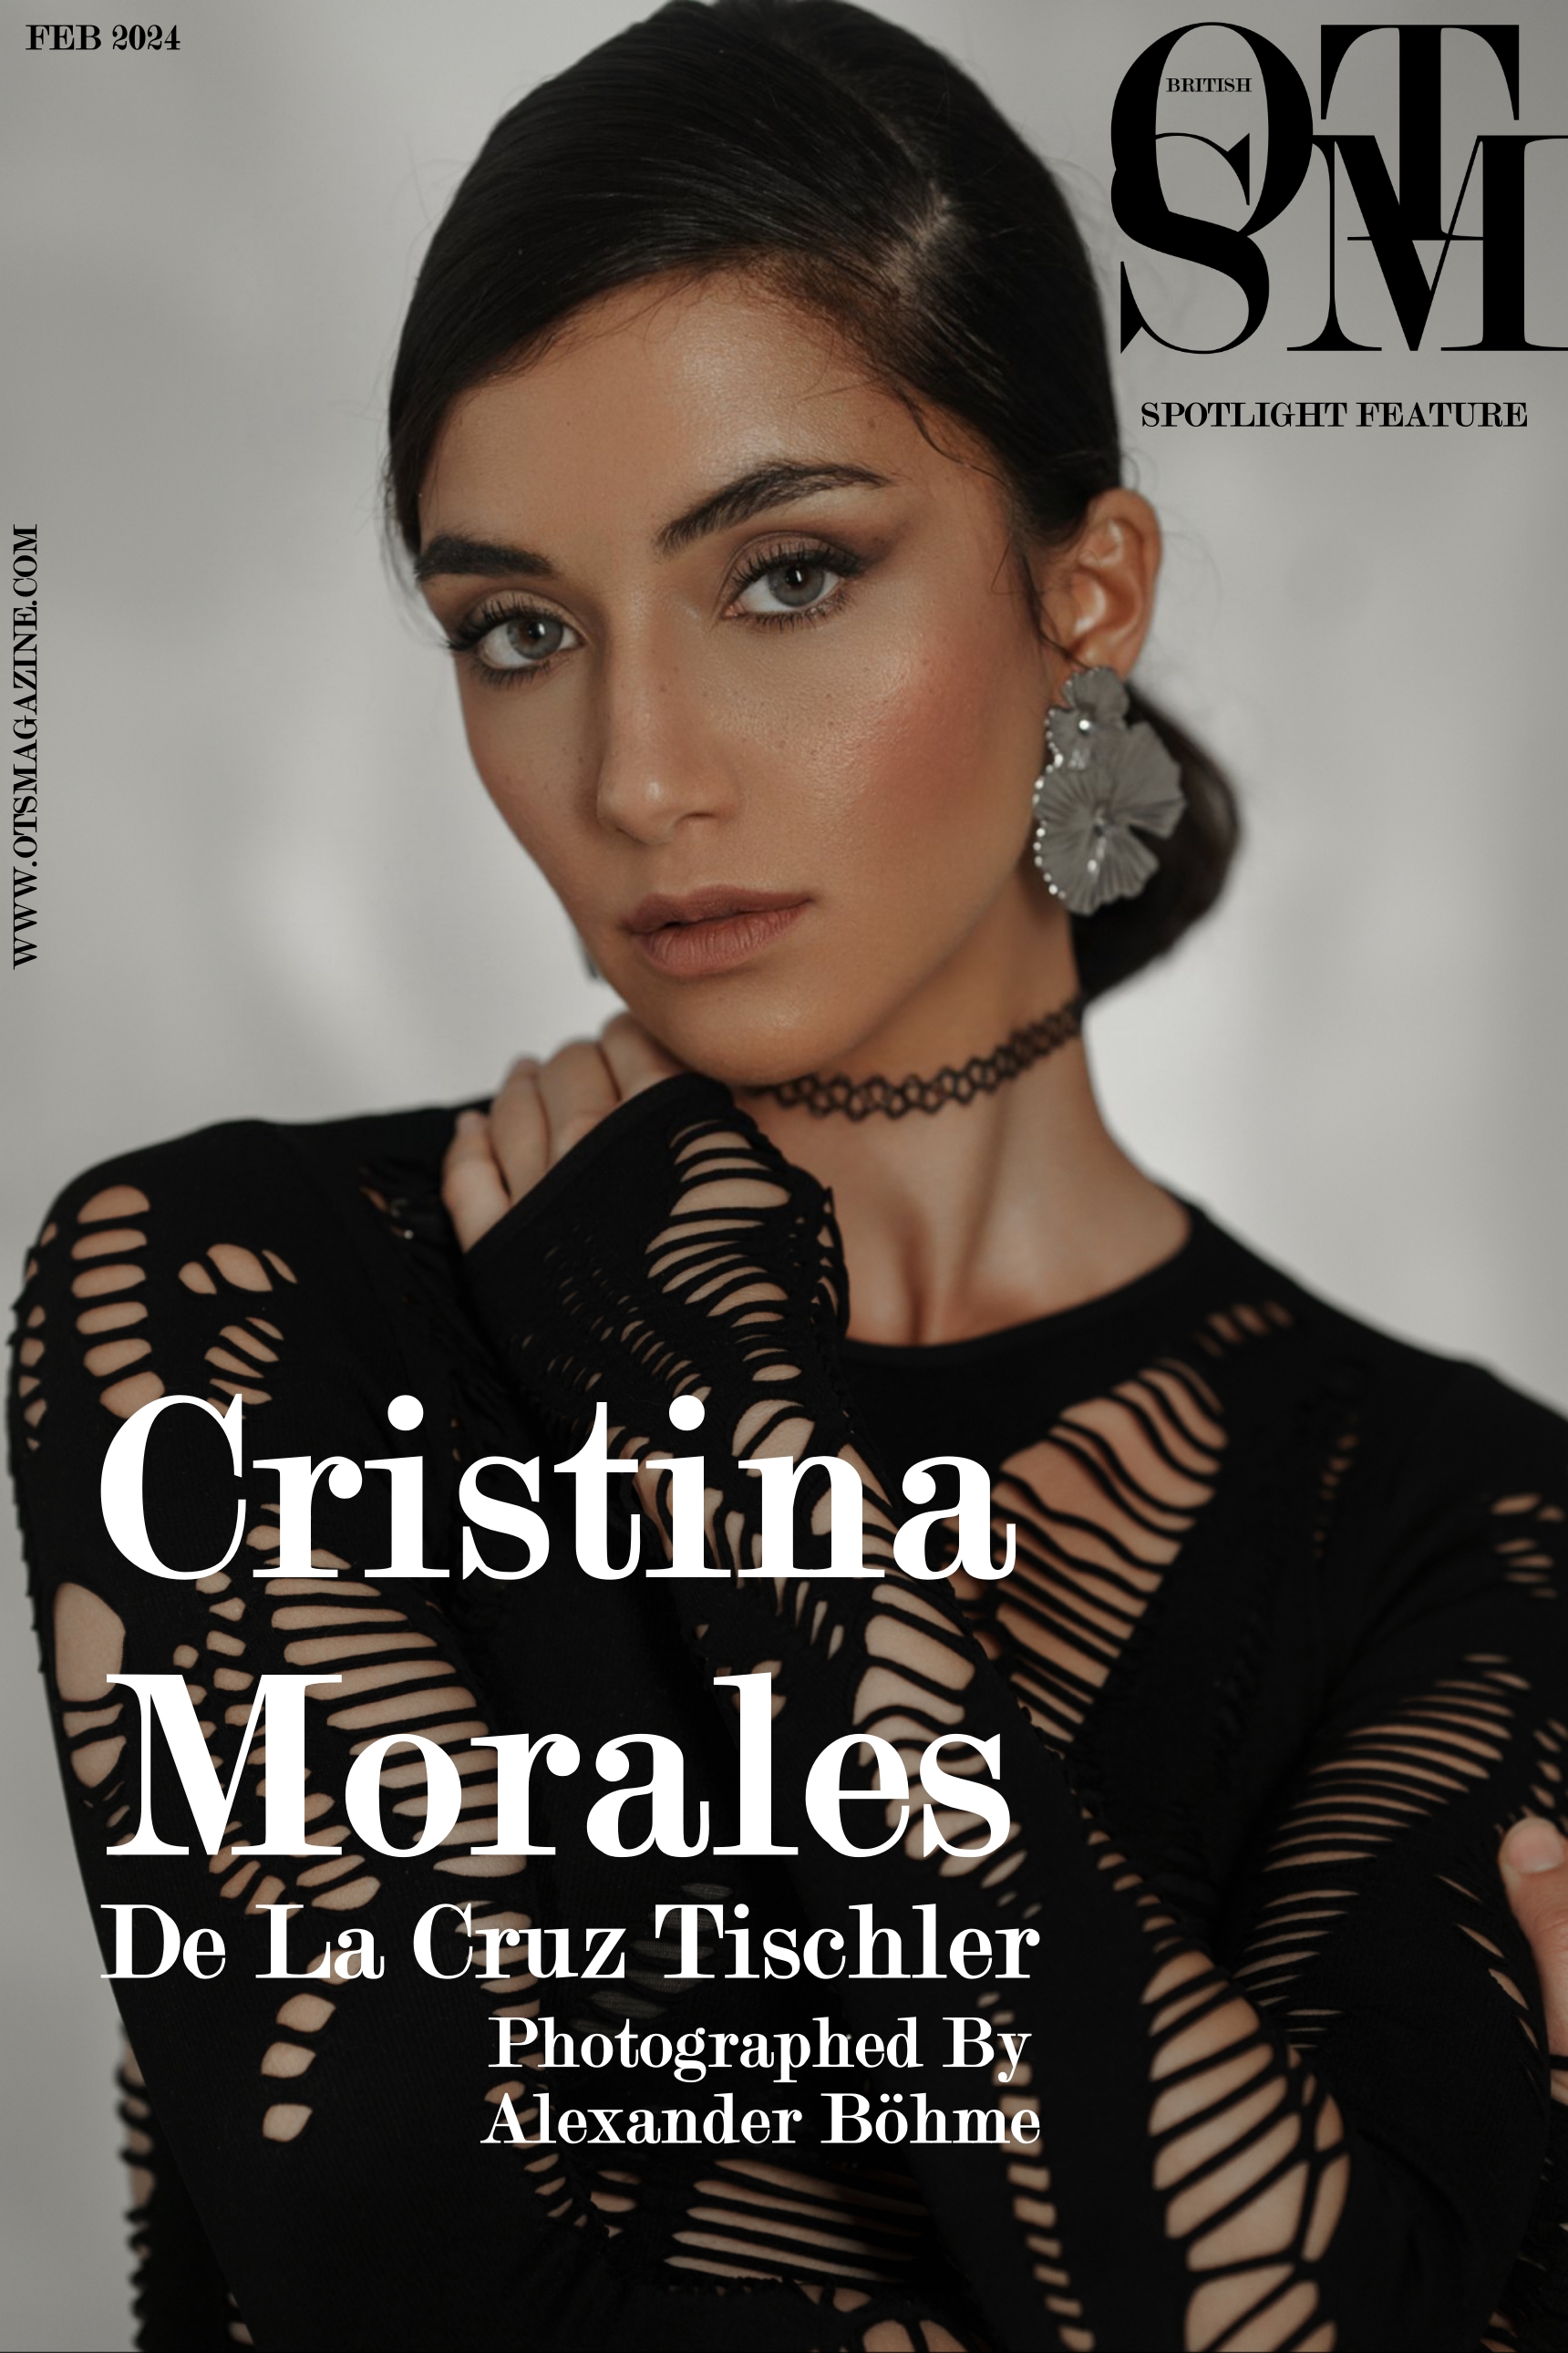 An Interview With Model and Actress 'Cristina Morales De La Cruz Tischler'.